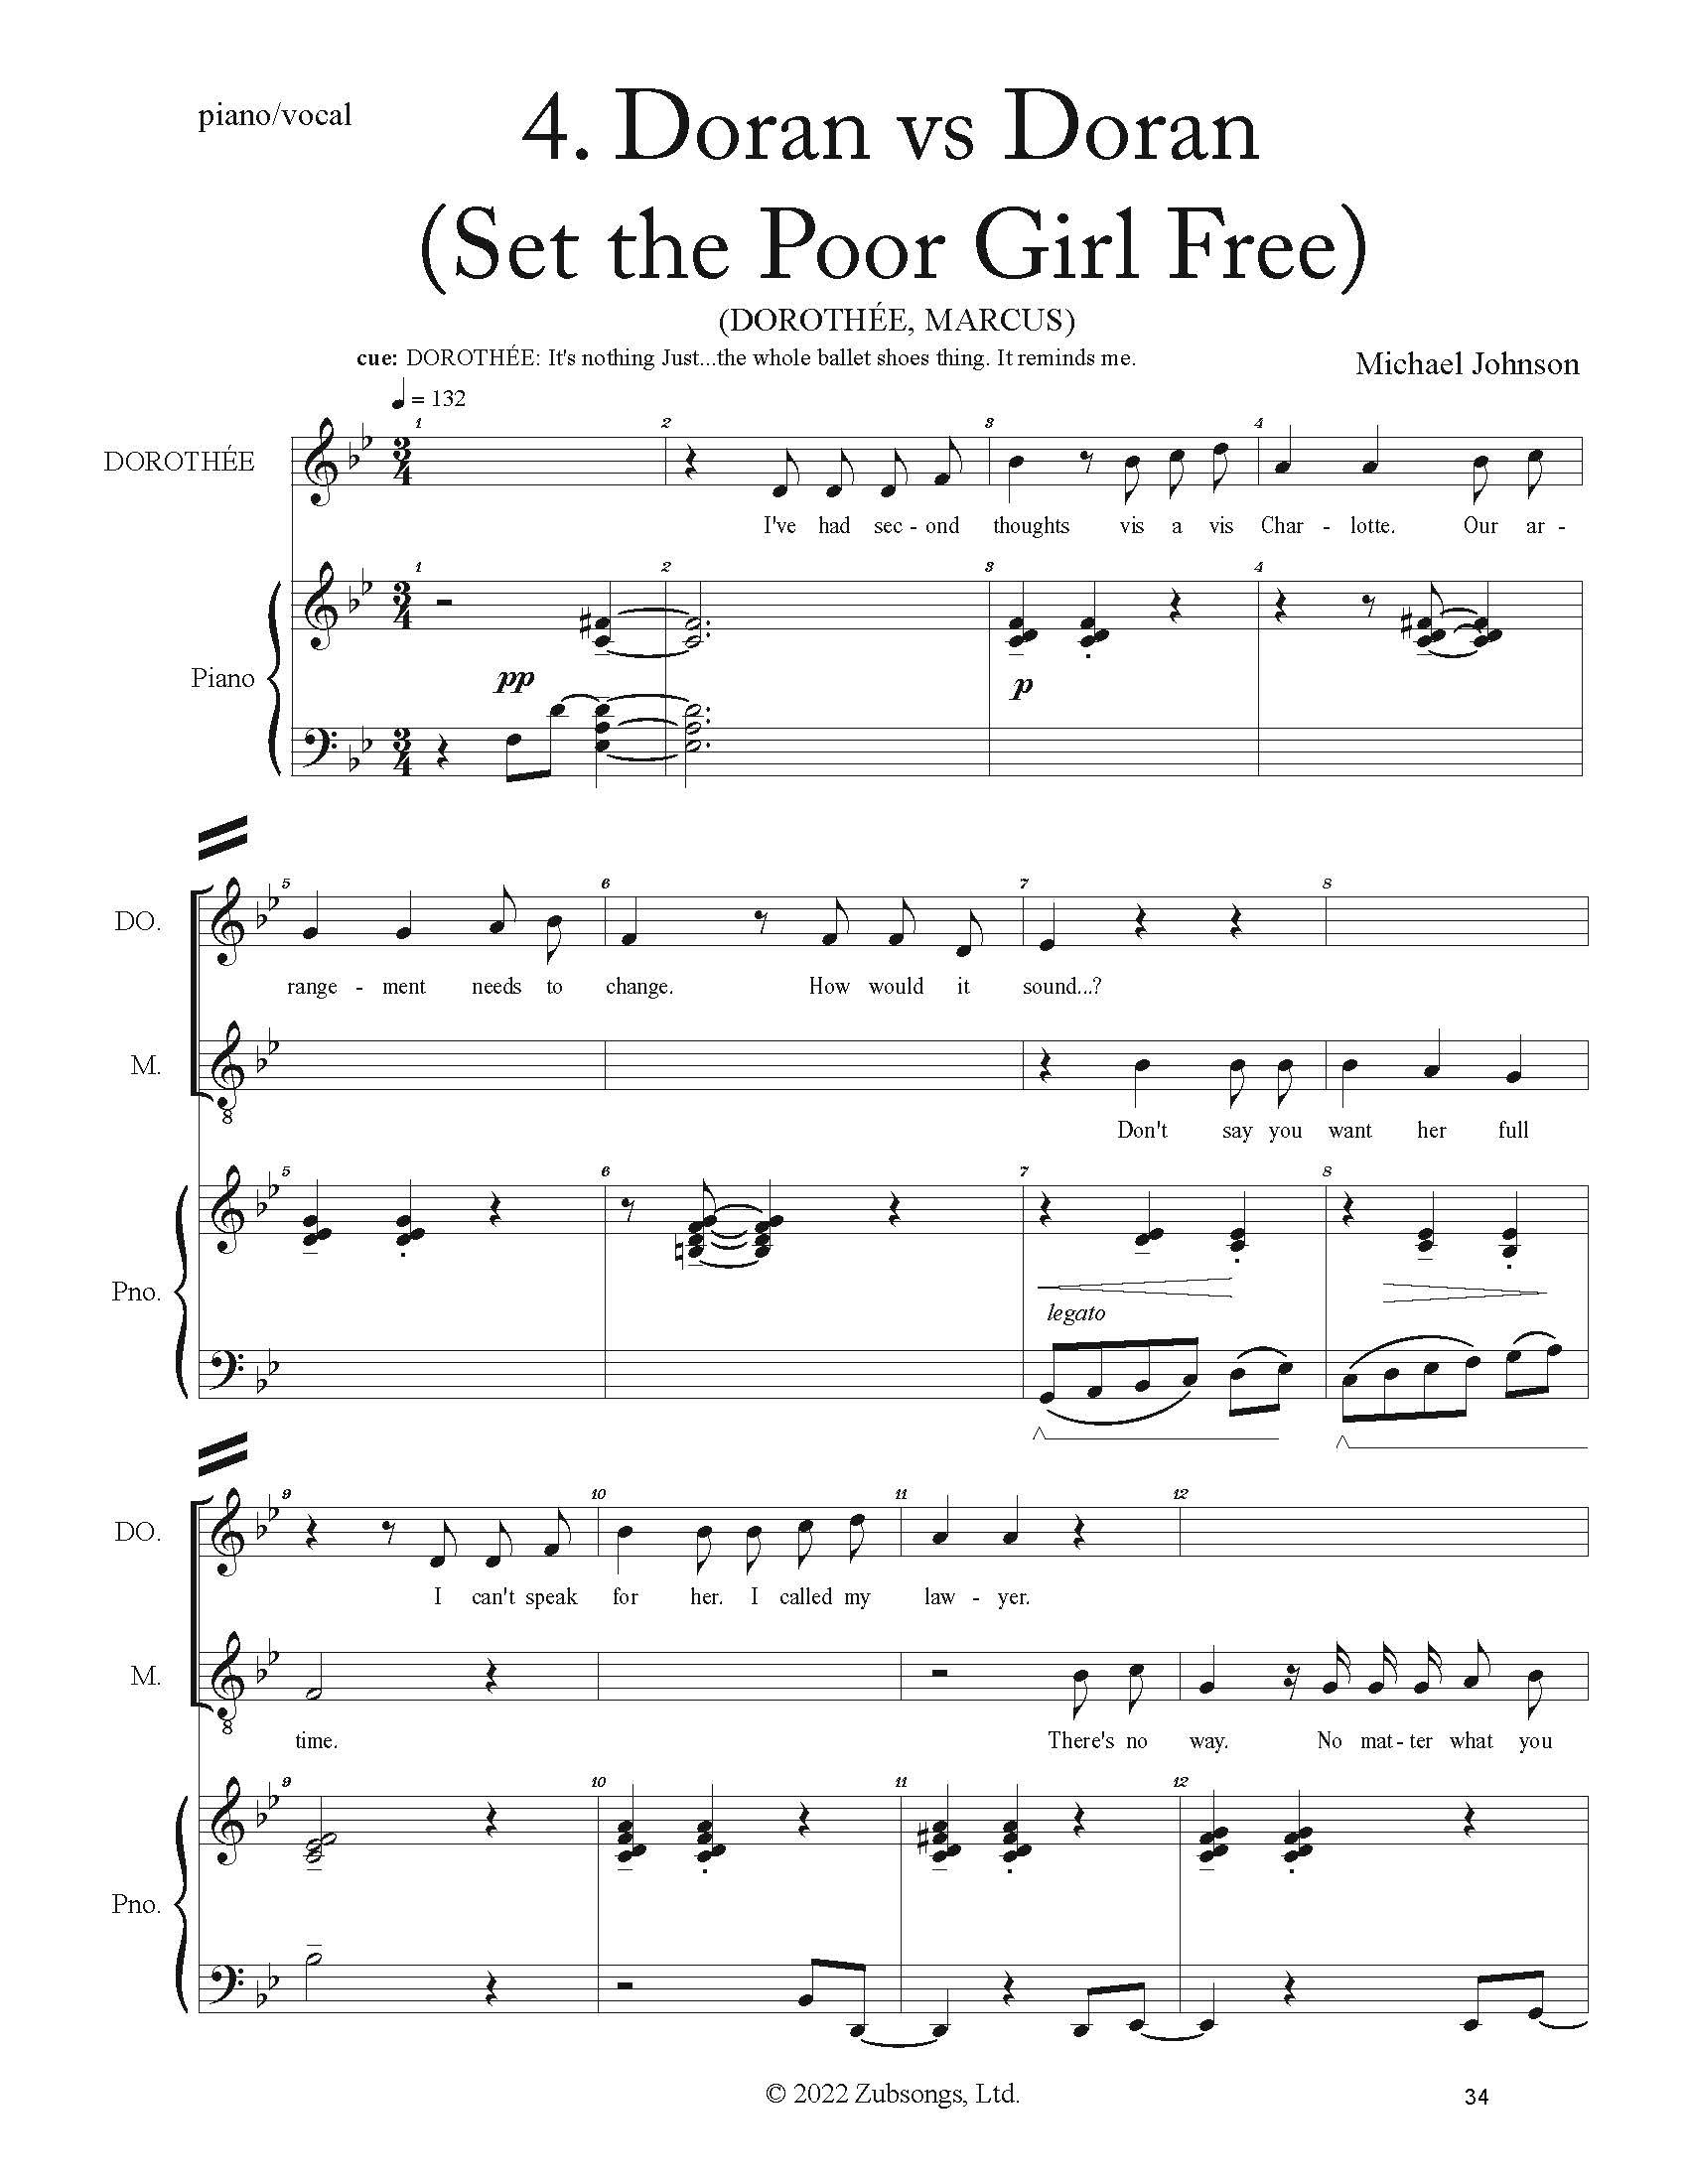 FULL PIANO VOCAL SCORE DRAFT 1 - Score_Page_034.jpg